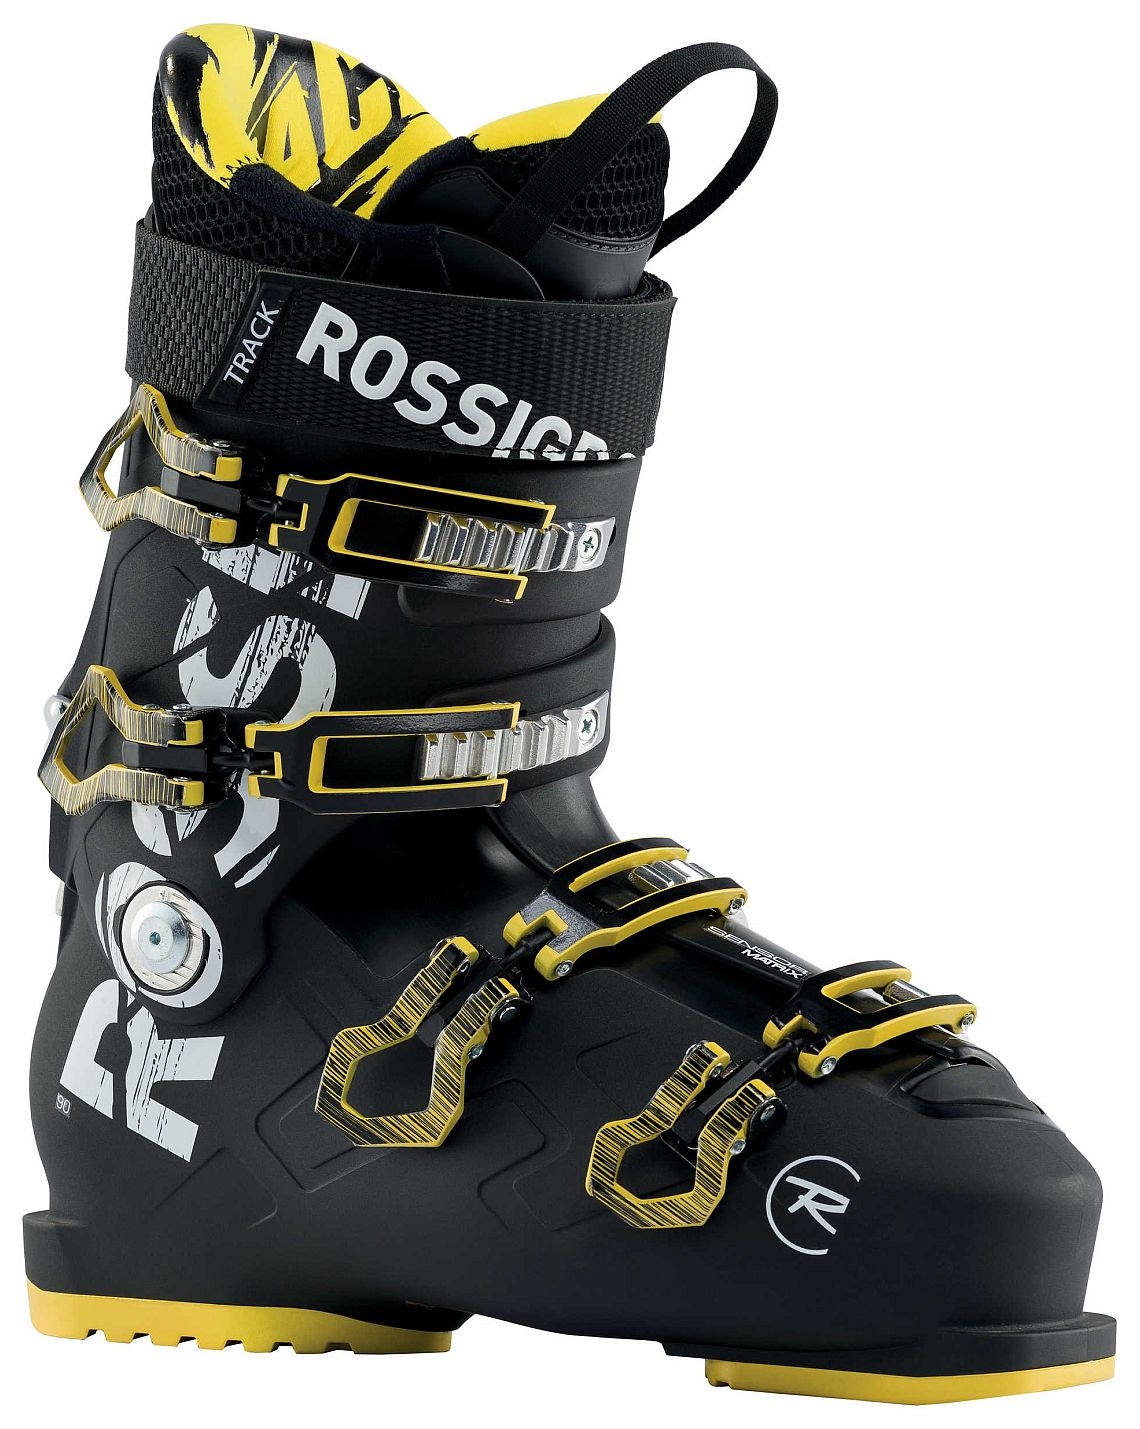 Rossignol buty narciarskie Track 90